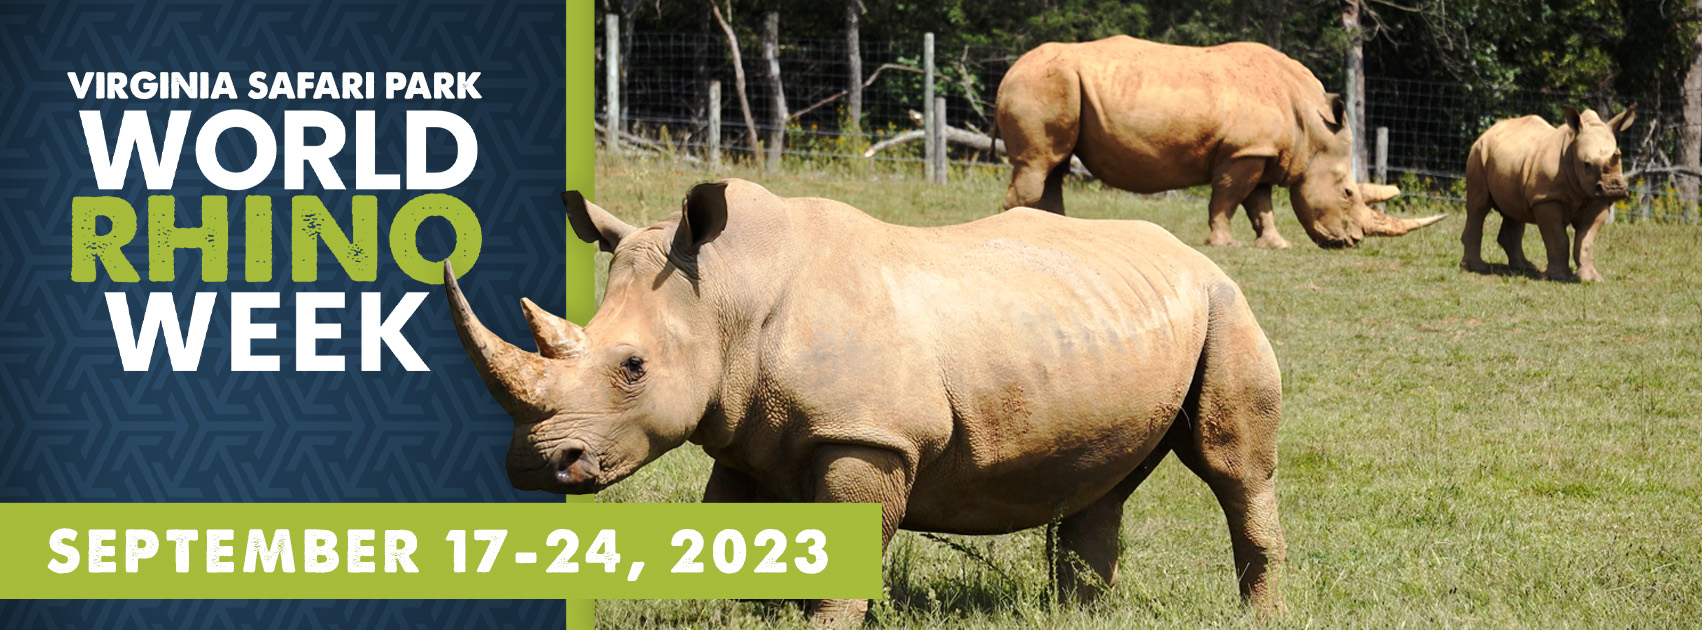 Celebrate Rhino Week at the Virginia Safari Park